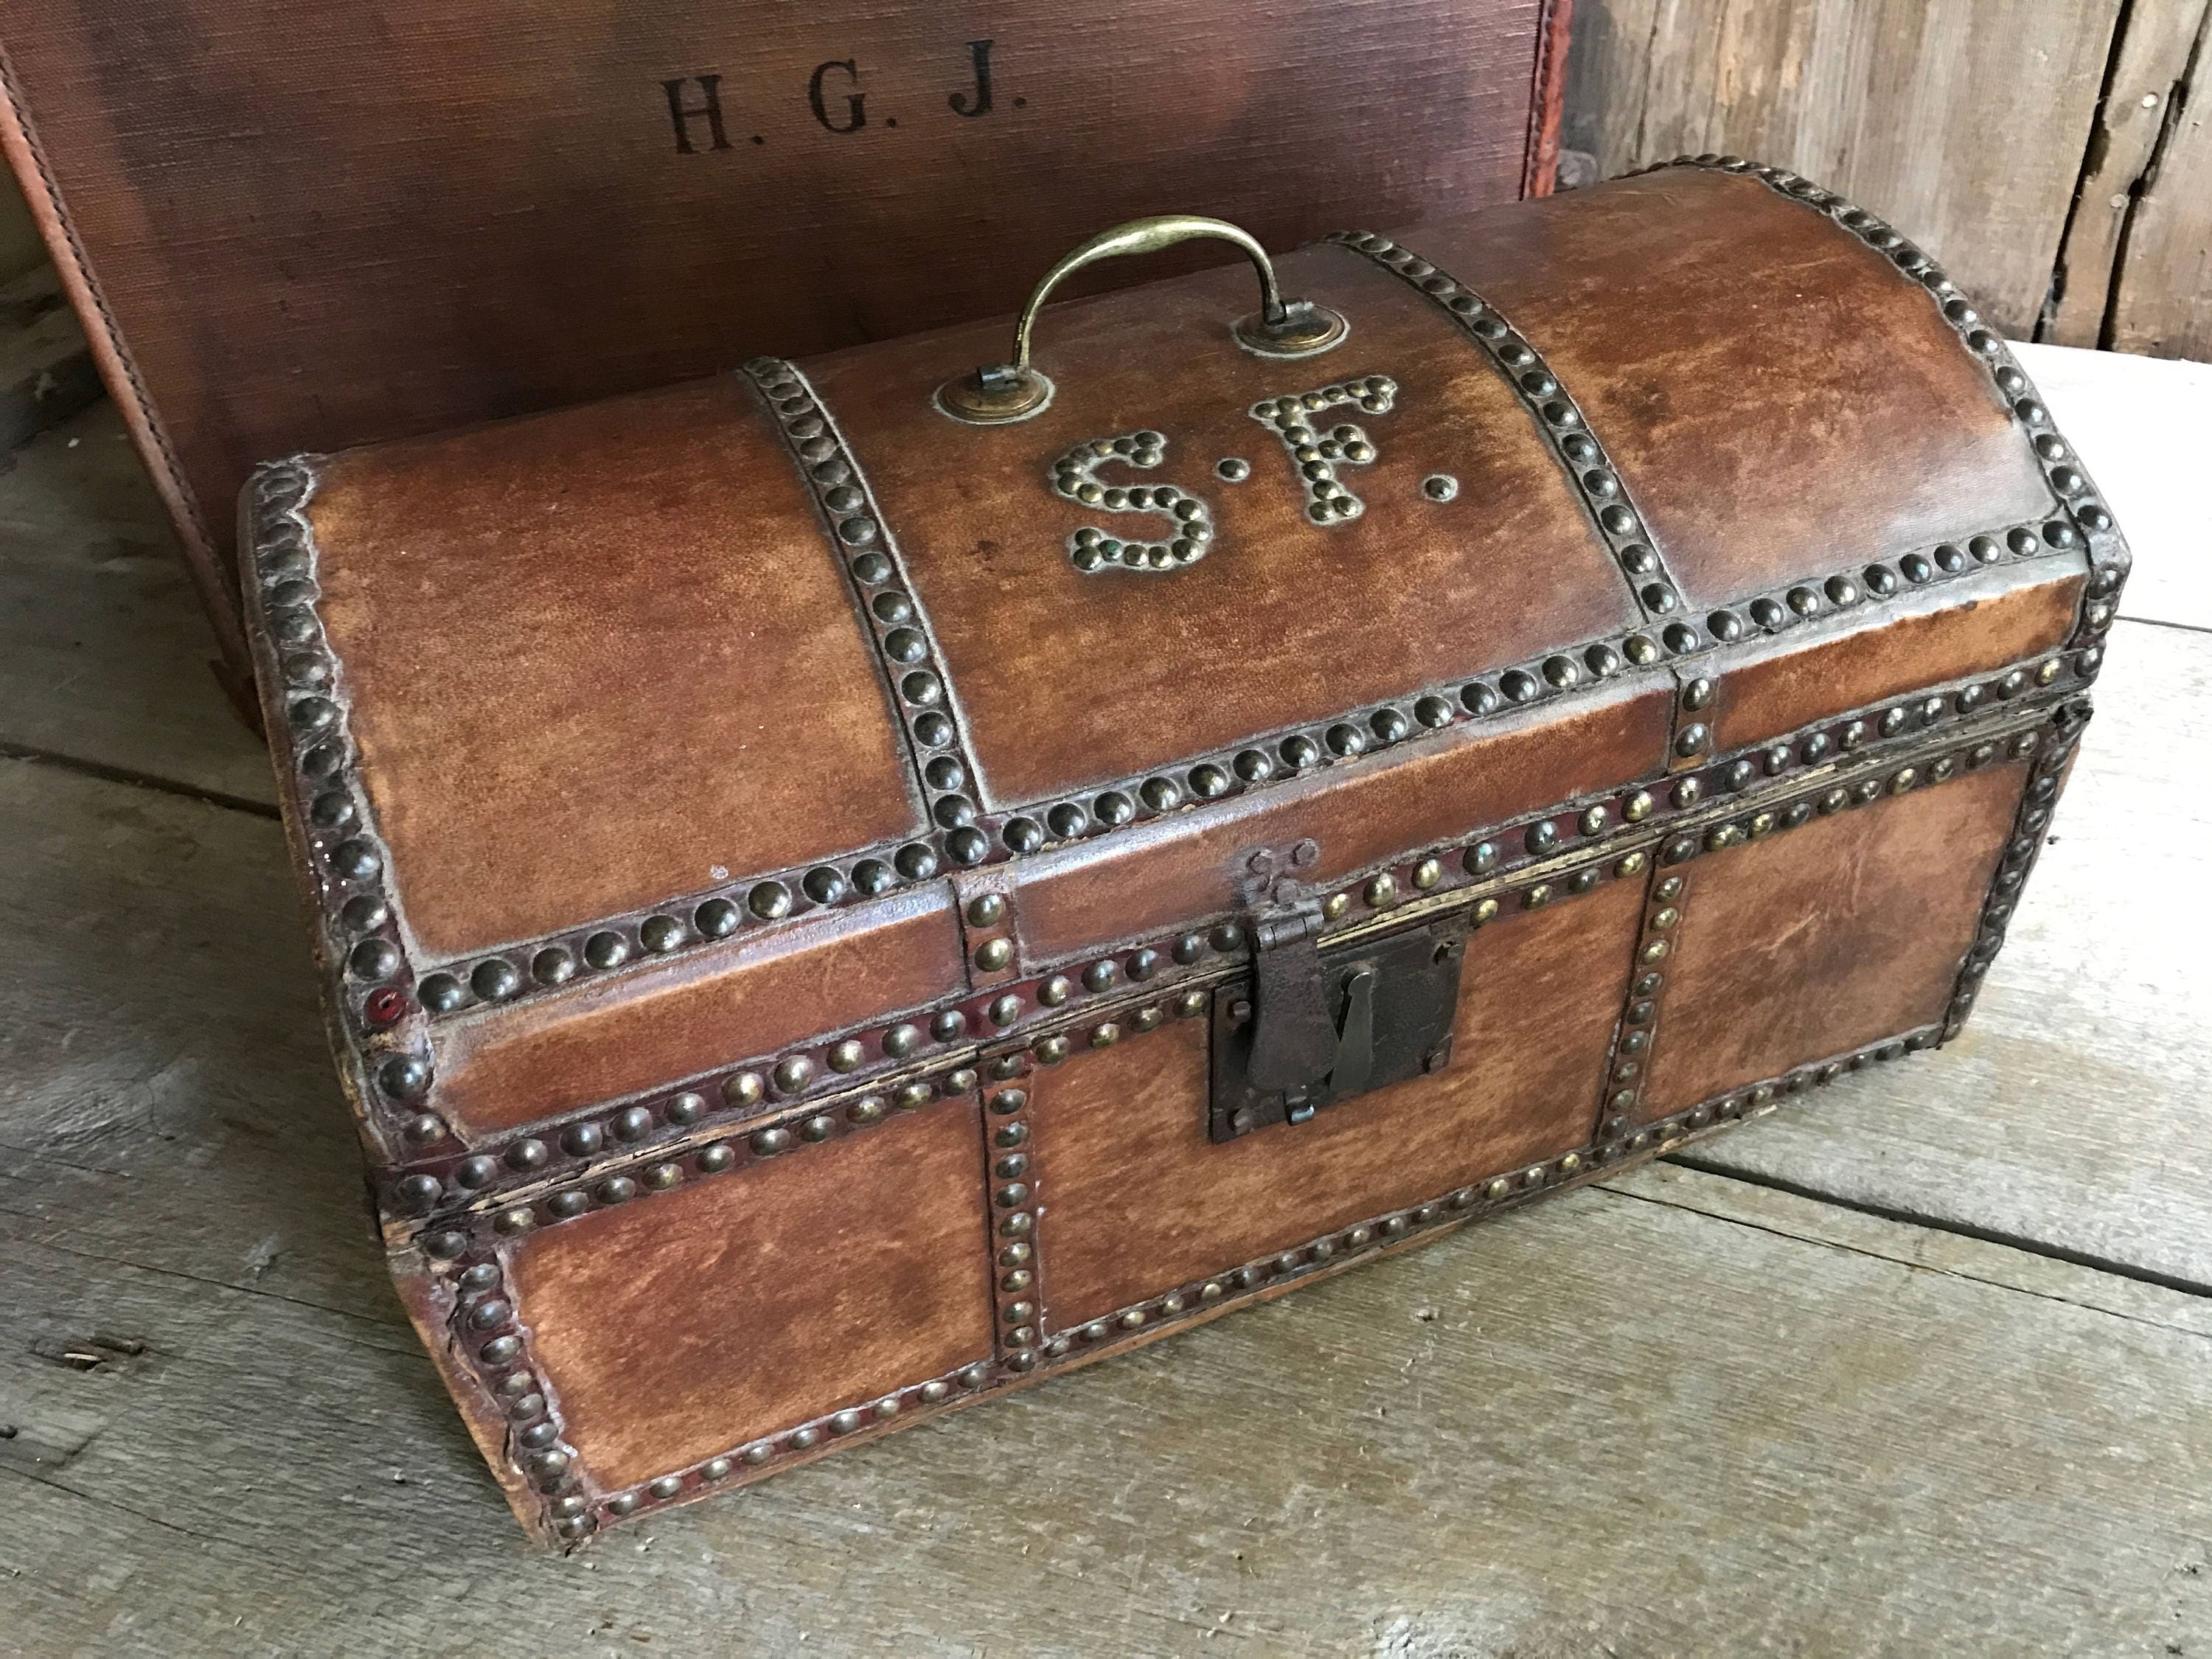 Vintage Leather Steamer Trunk - Wonderful English Luggage Case